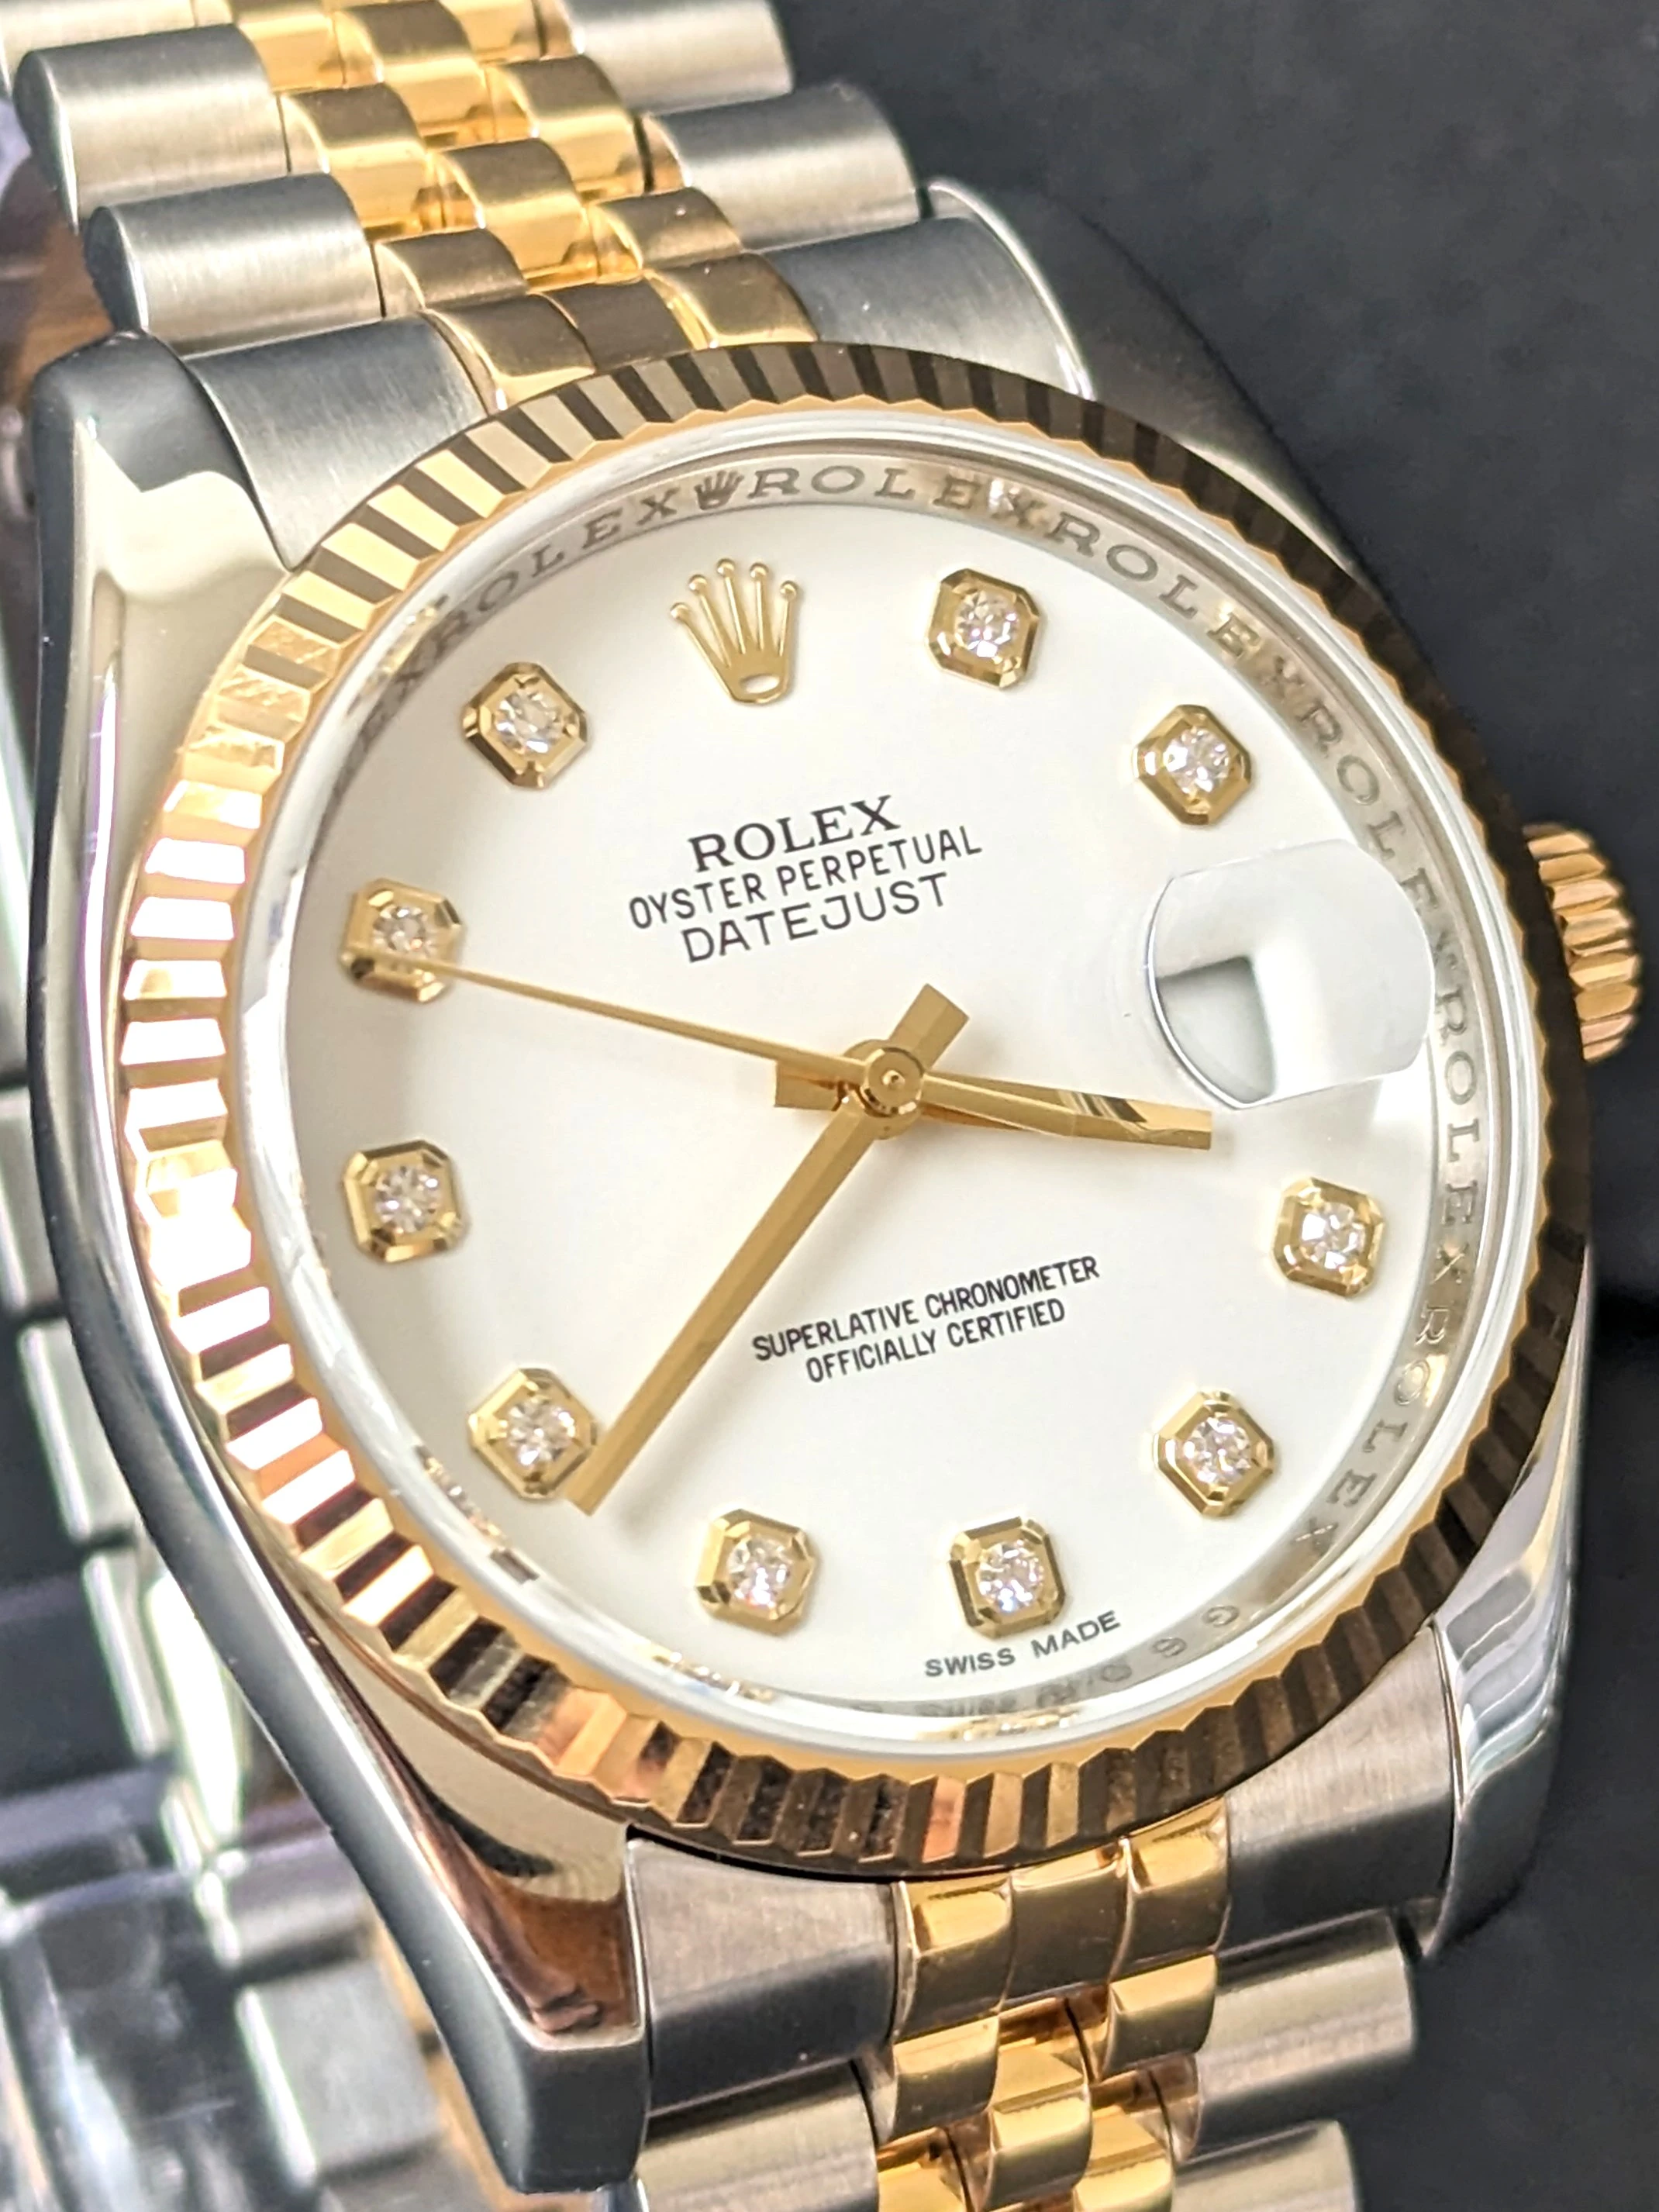 Rolex Watches for Men -DATEJUST 36MM Dublin, Ireland